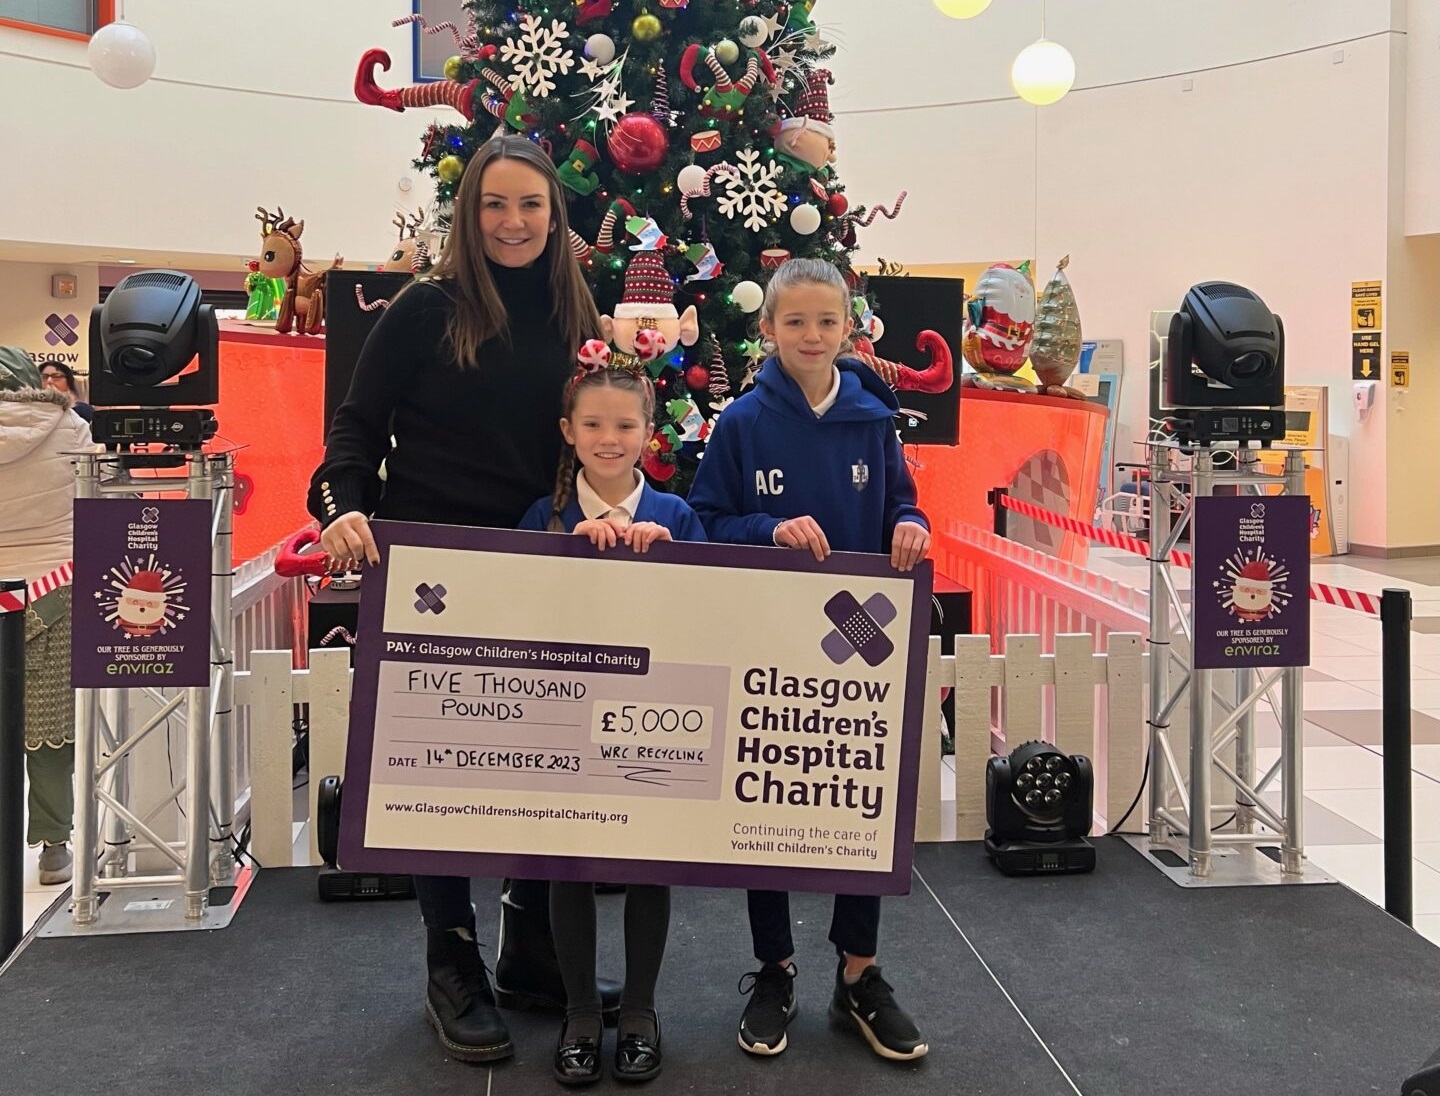 WRC Recycling donates £5,000 to Glasgow Children’s Hospital